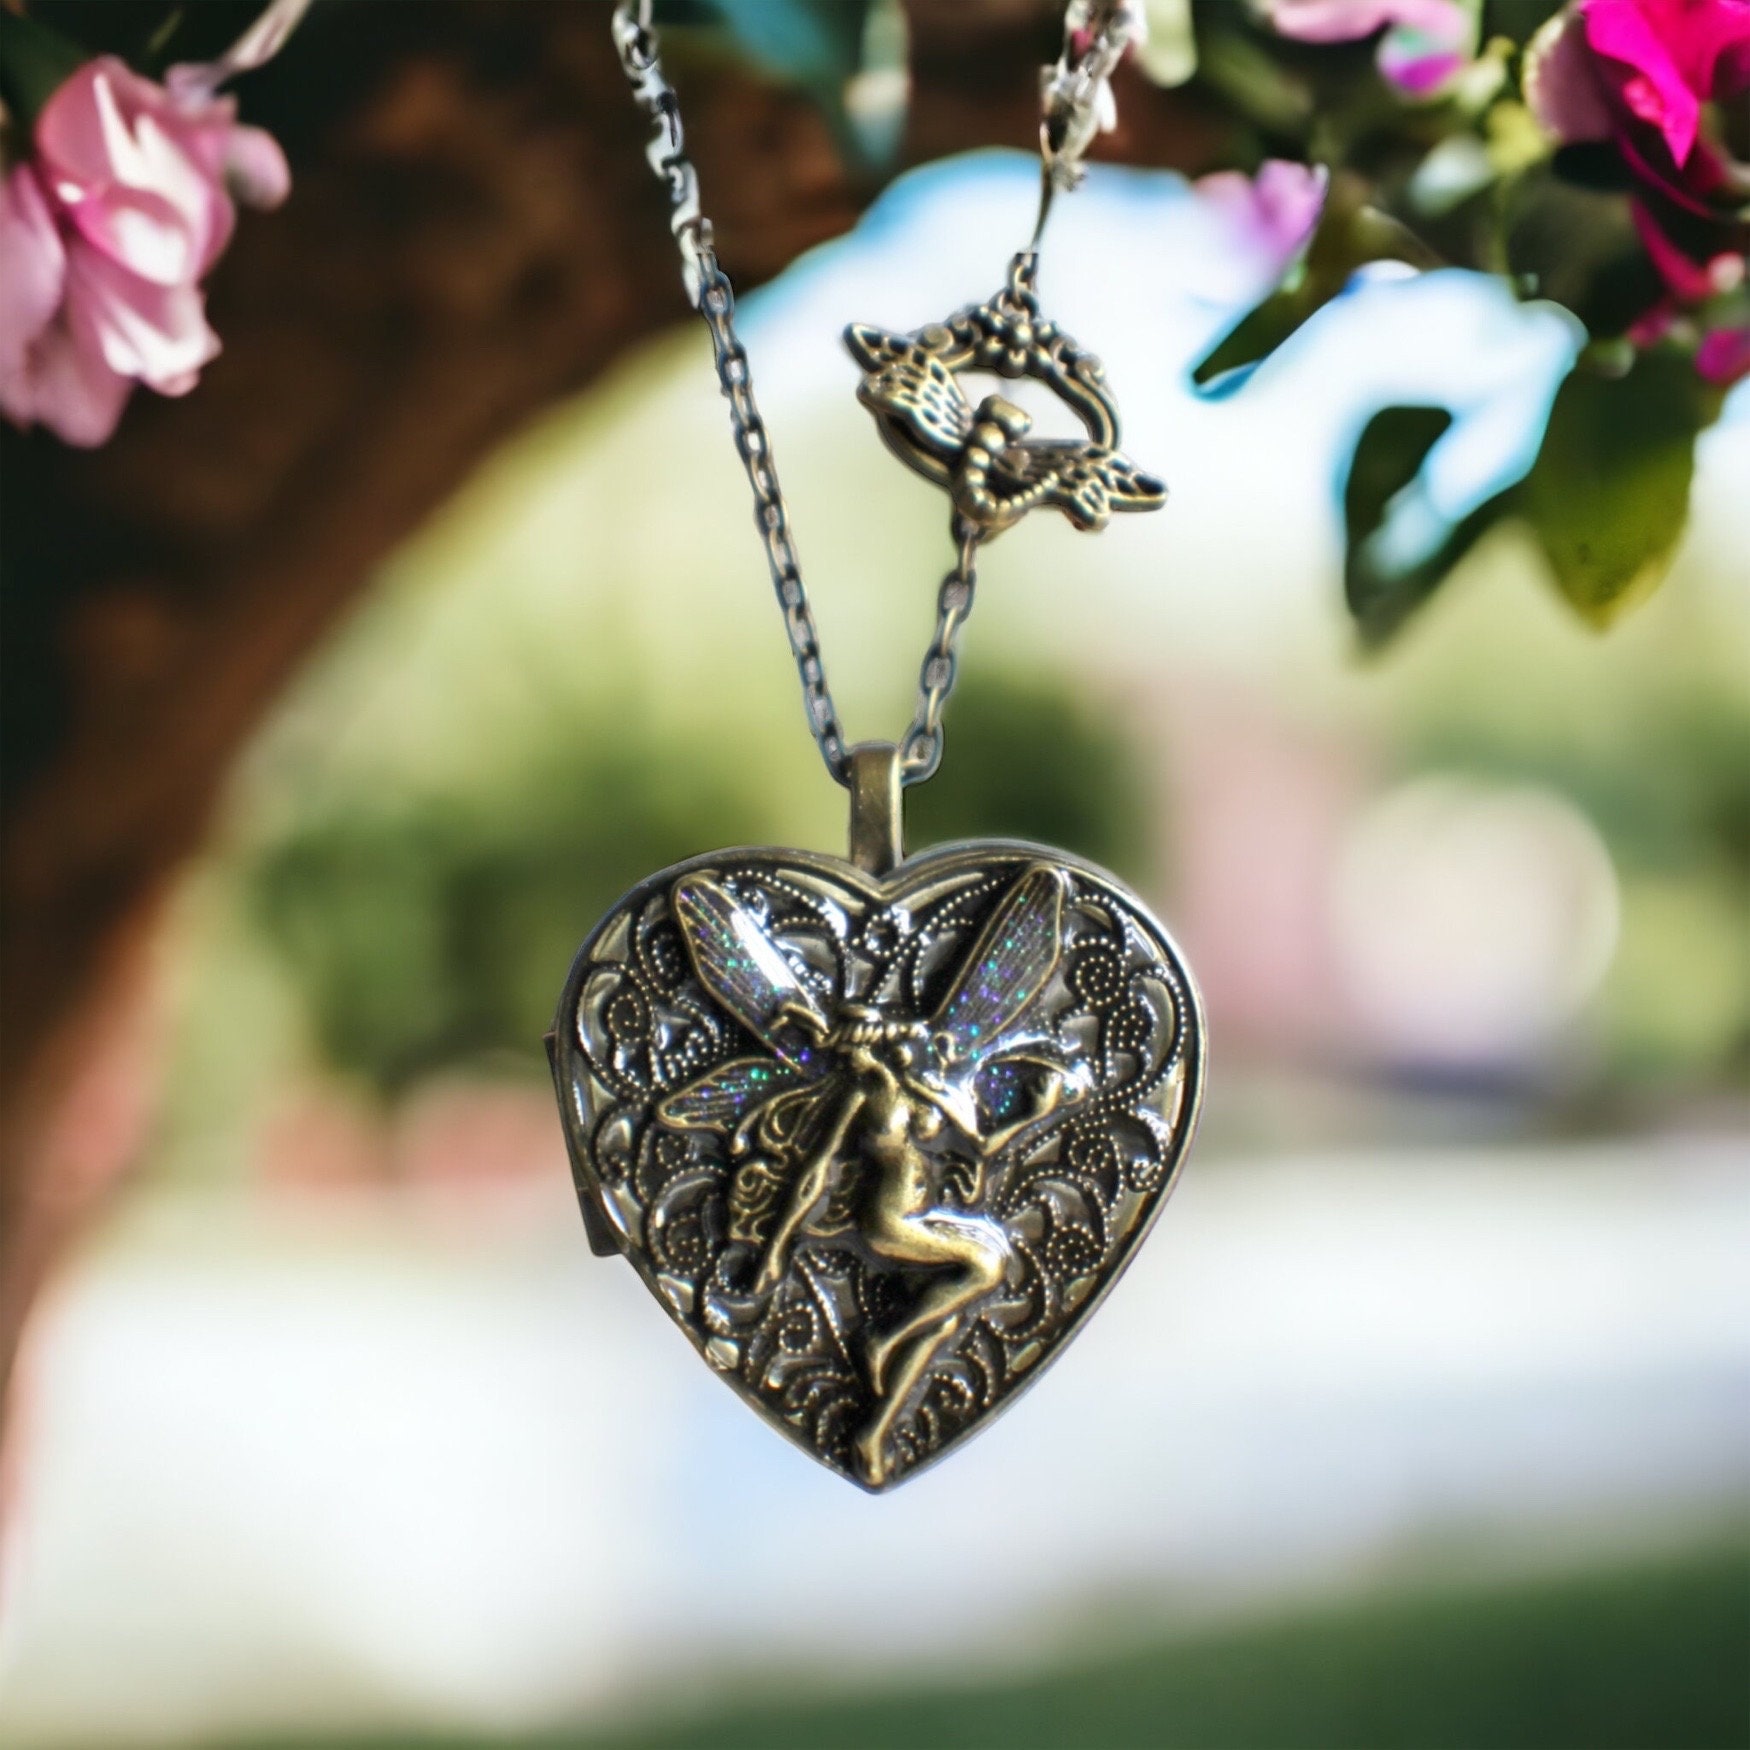 Turquoise heart music box locket #jewelry #holidaygift #charsfavoritethings  #handmade #Uniquehandmadegifts | Instagram